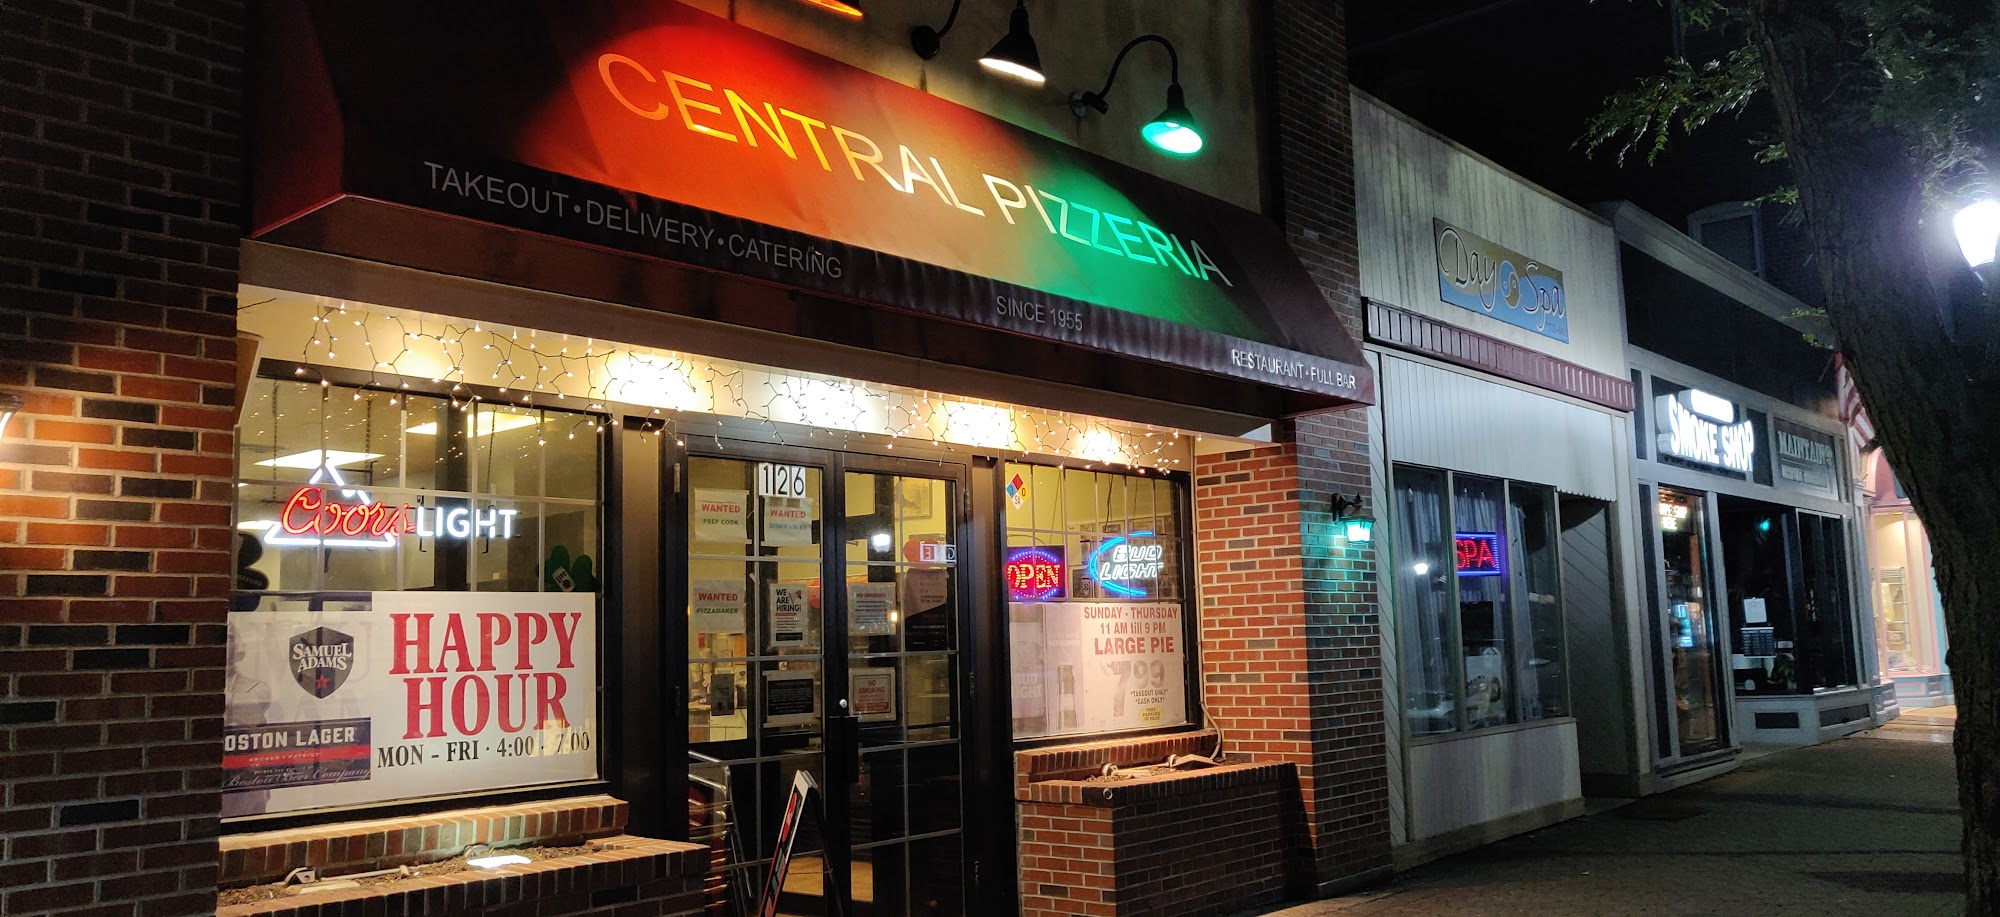 Central Pizzeria